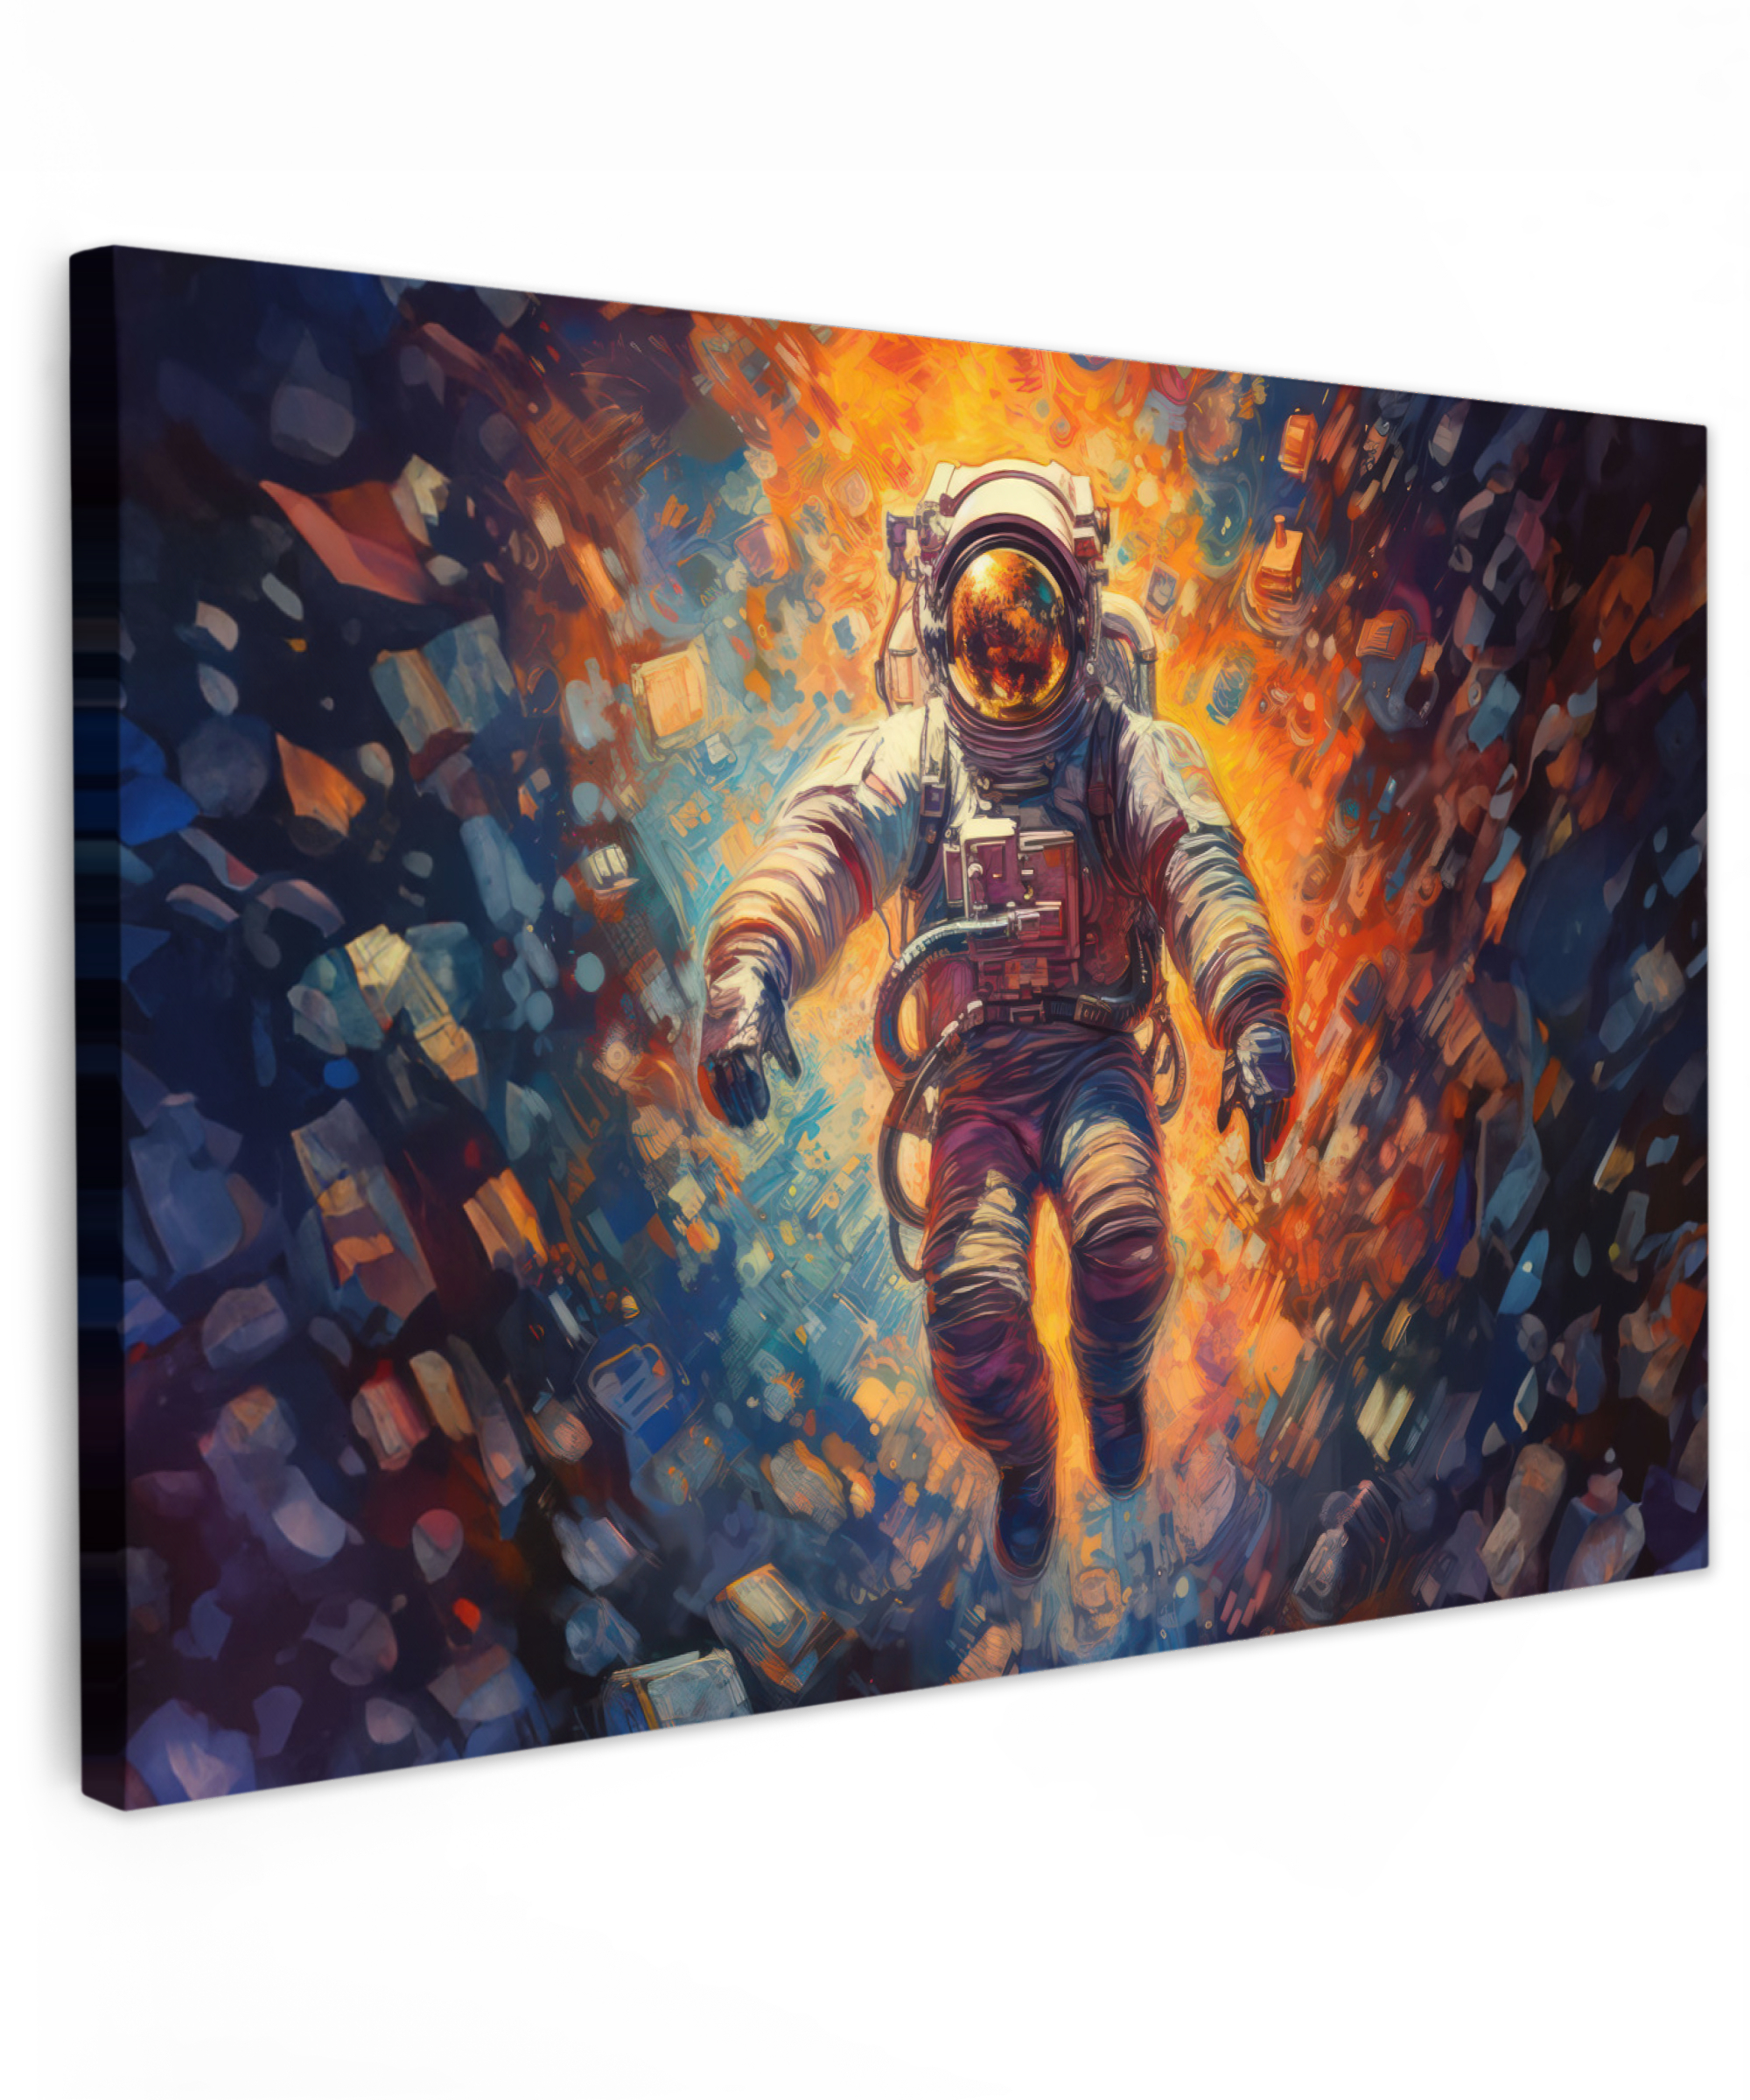 Canvas schilderij - Astronaut - Neon - Oranje - Ruimte